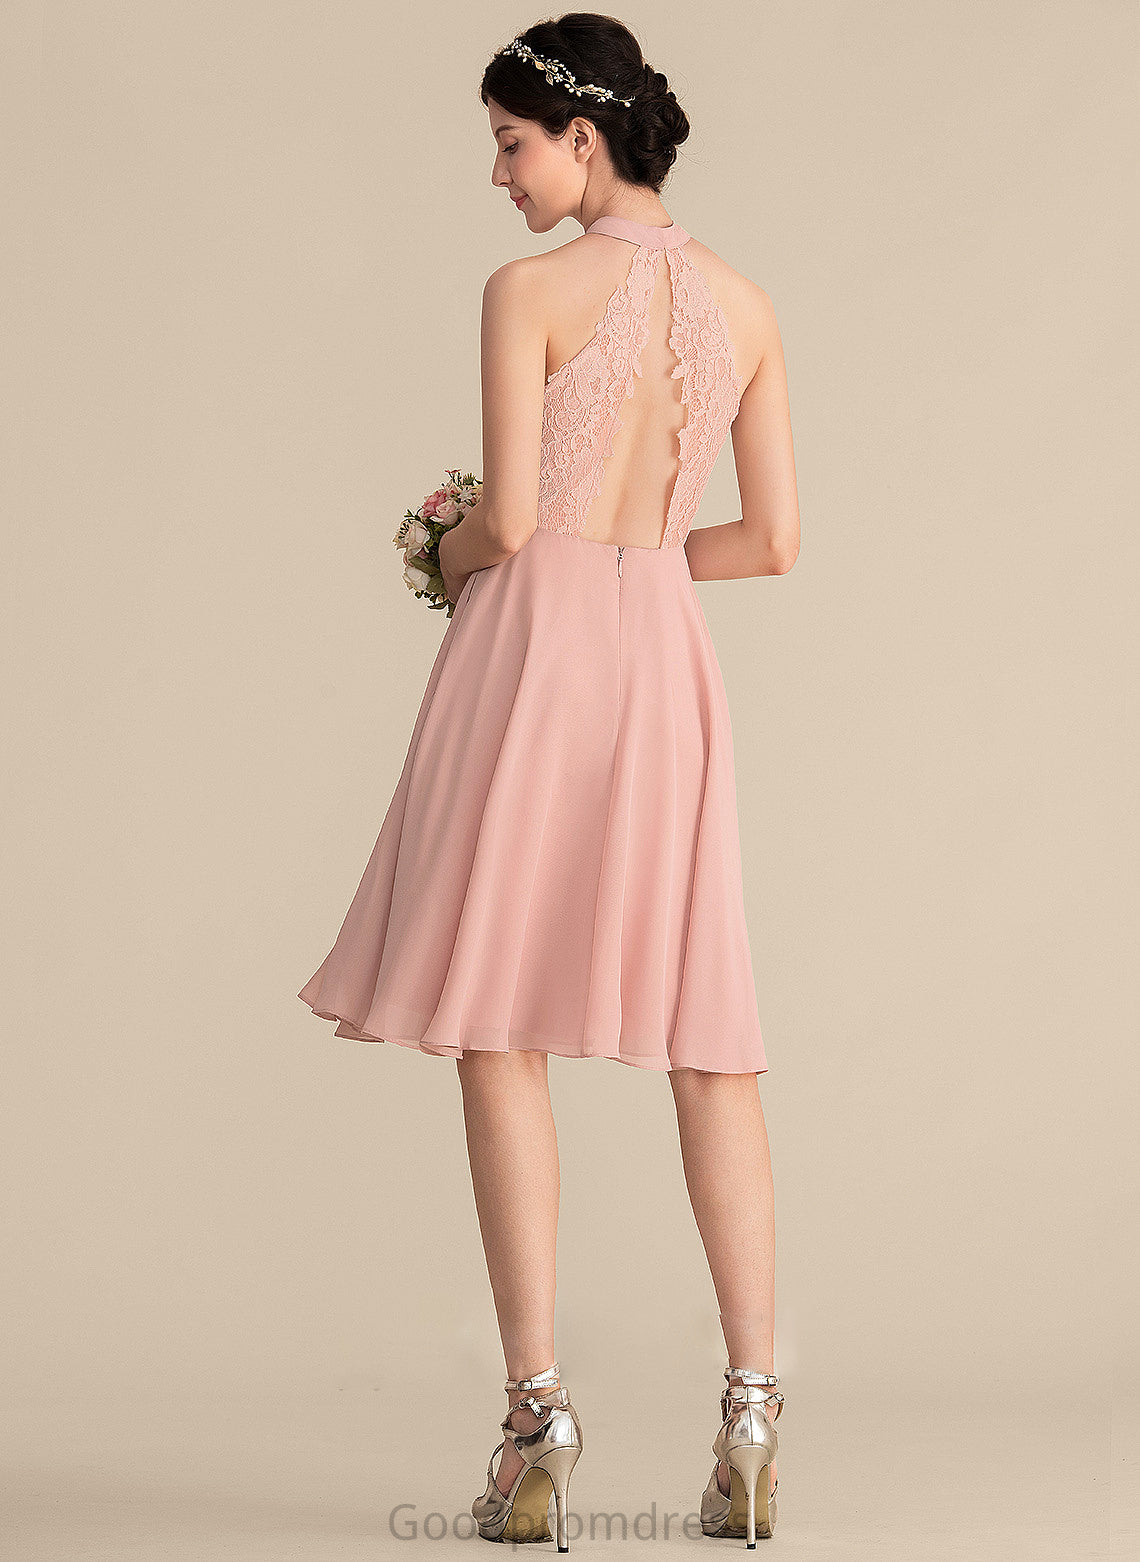 Knee-Length Fabric A-Line Length Silhouette ScoopNeck Embellishment Lace Neckline Pockets Kassandra Halter Bridesmaid Dresses